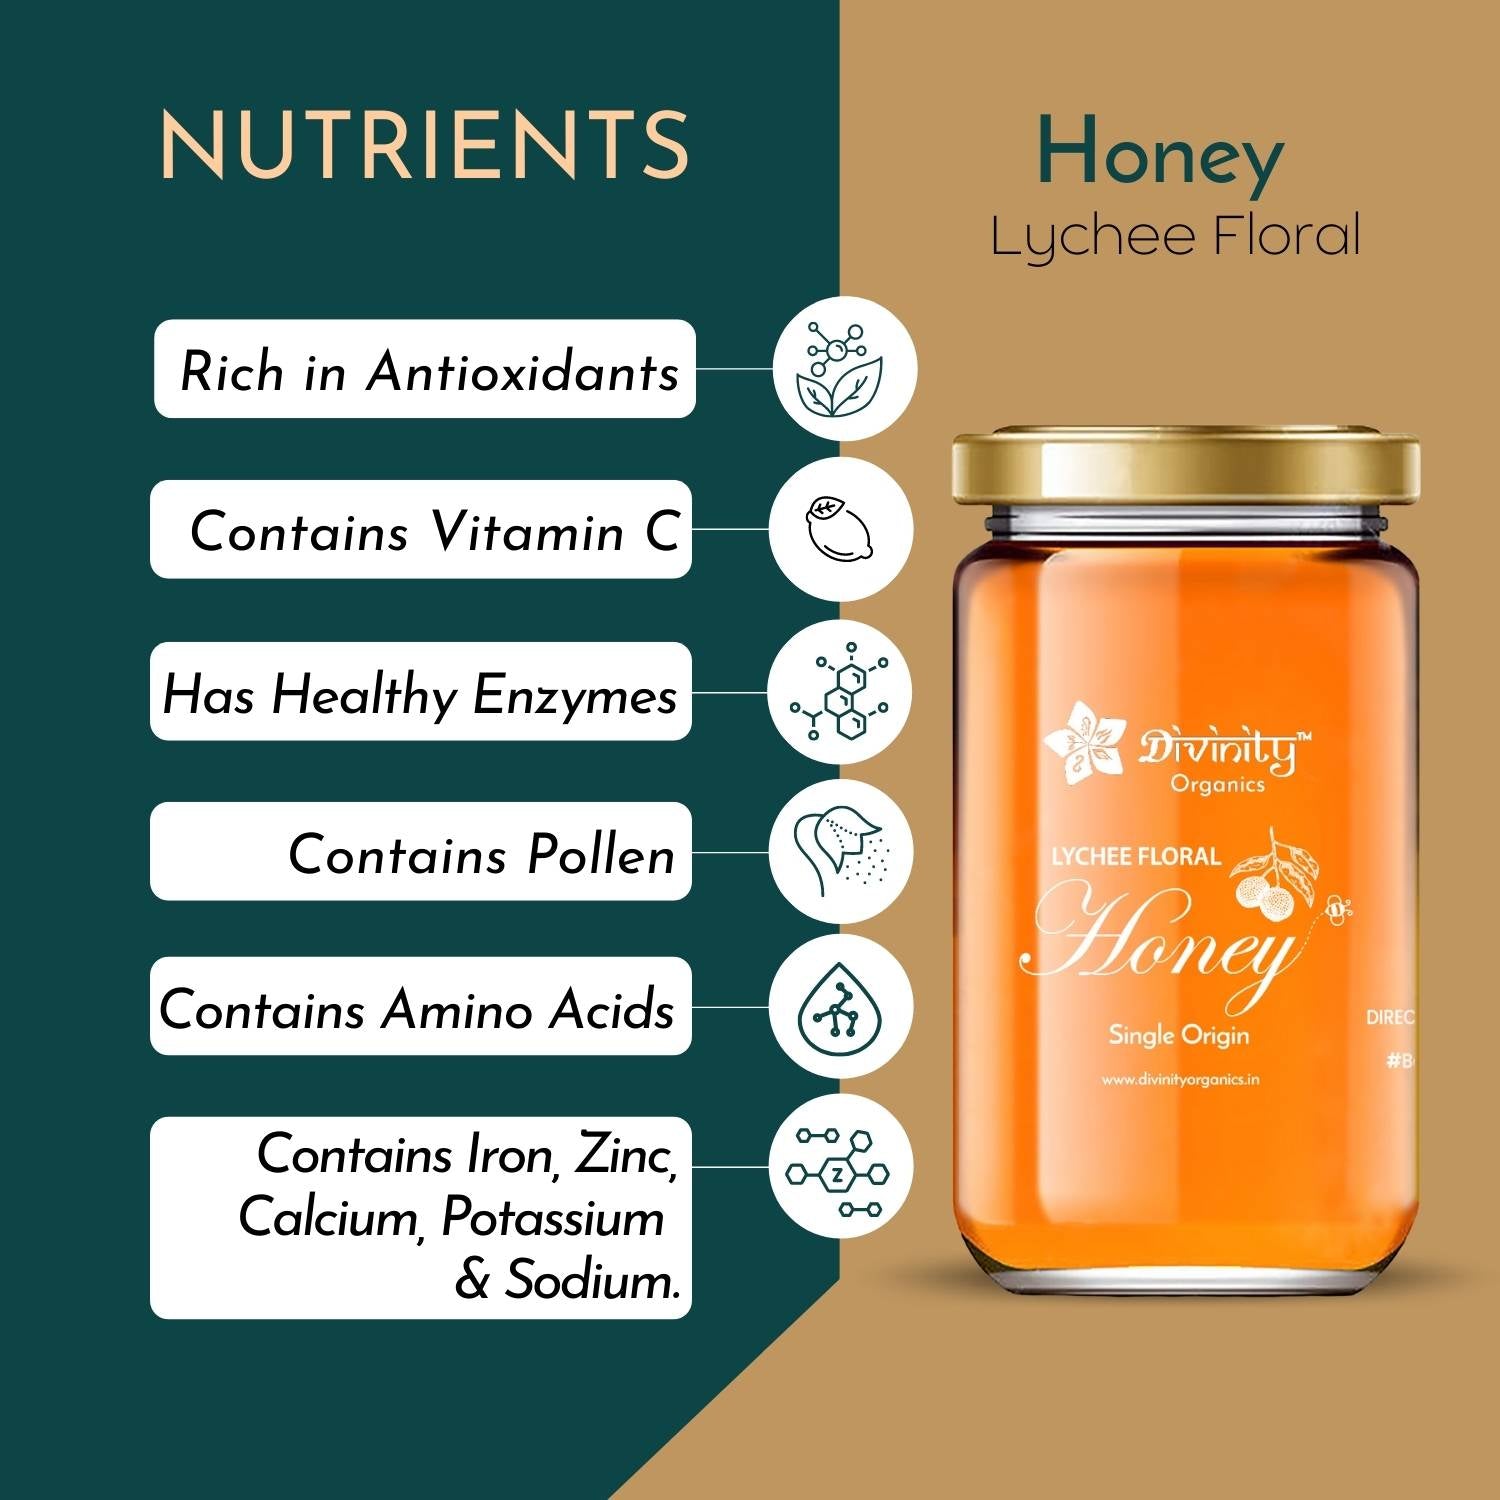 Divinity Organics Lychee Floral Honey Nutrients